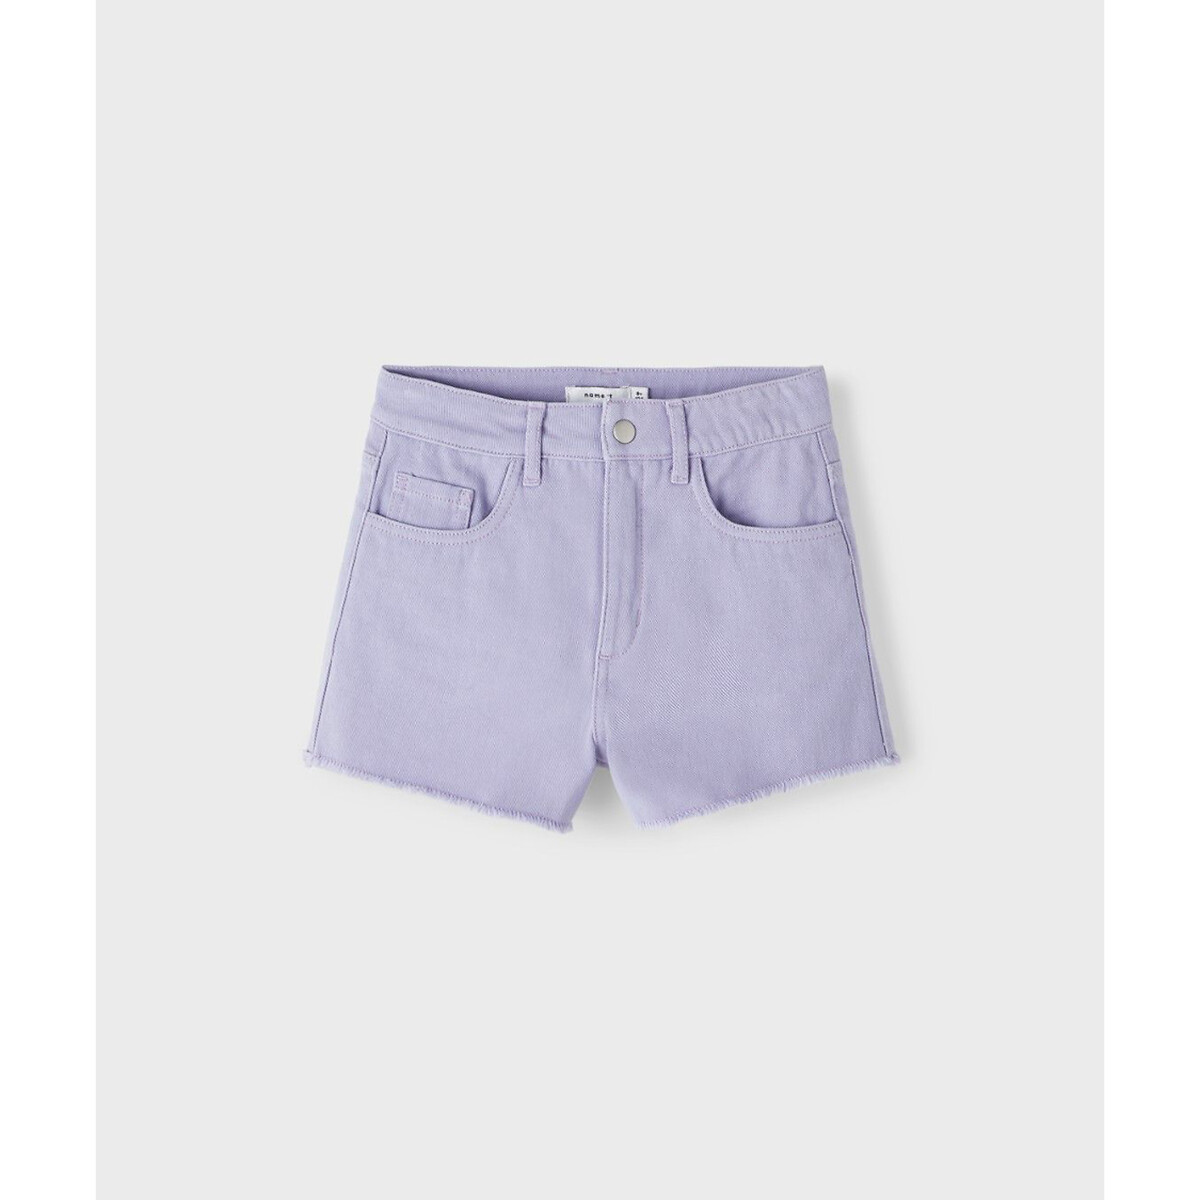 Image of Organic Cotton Denim Shorts